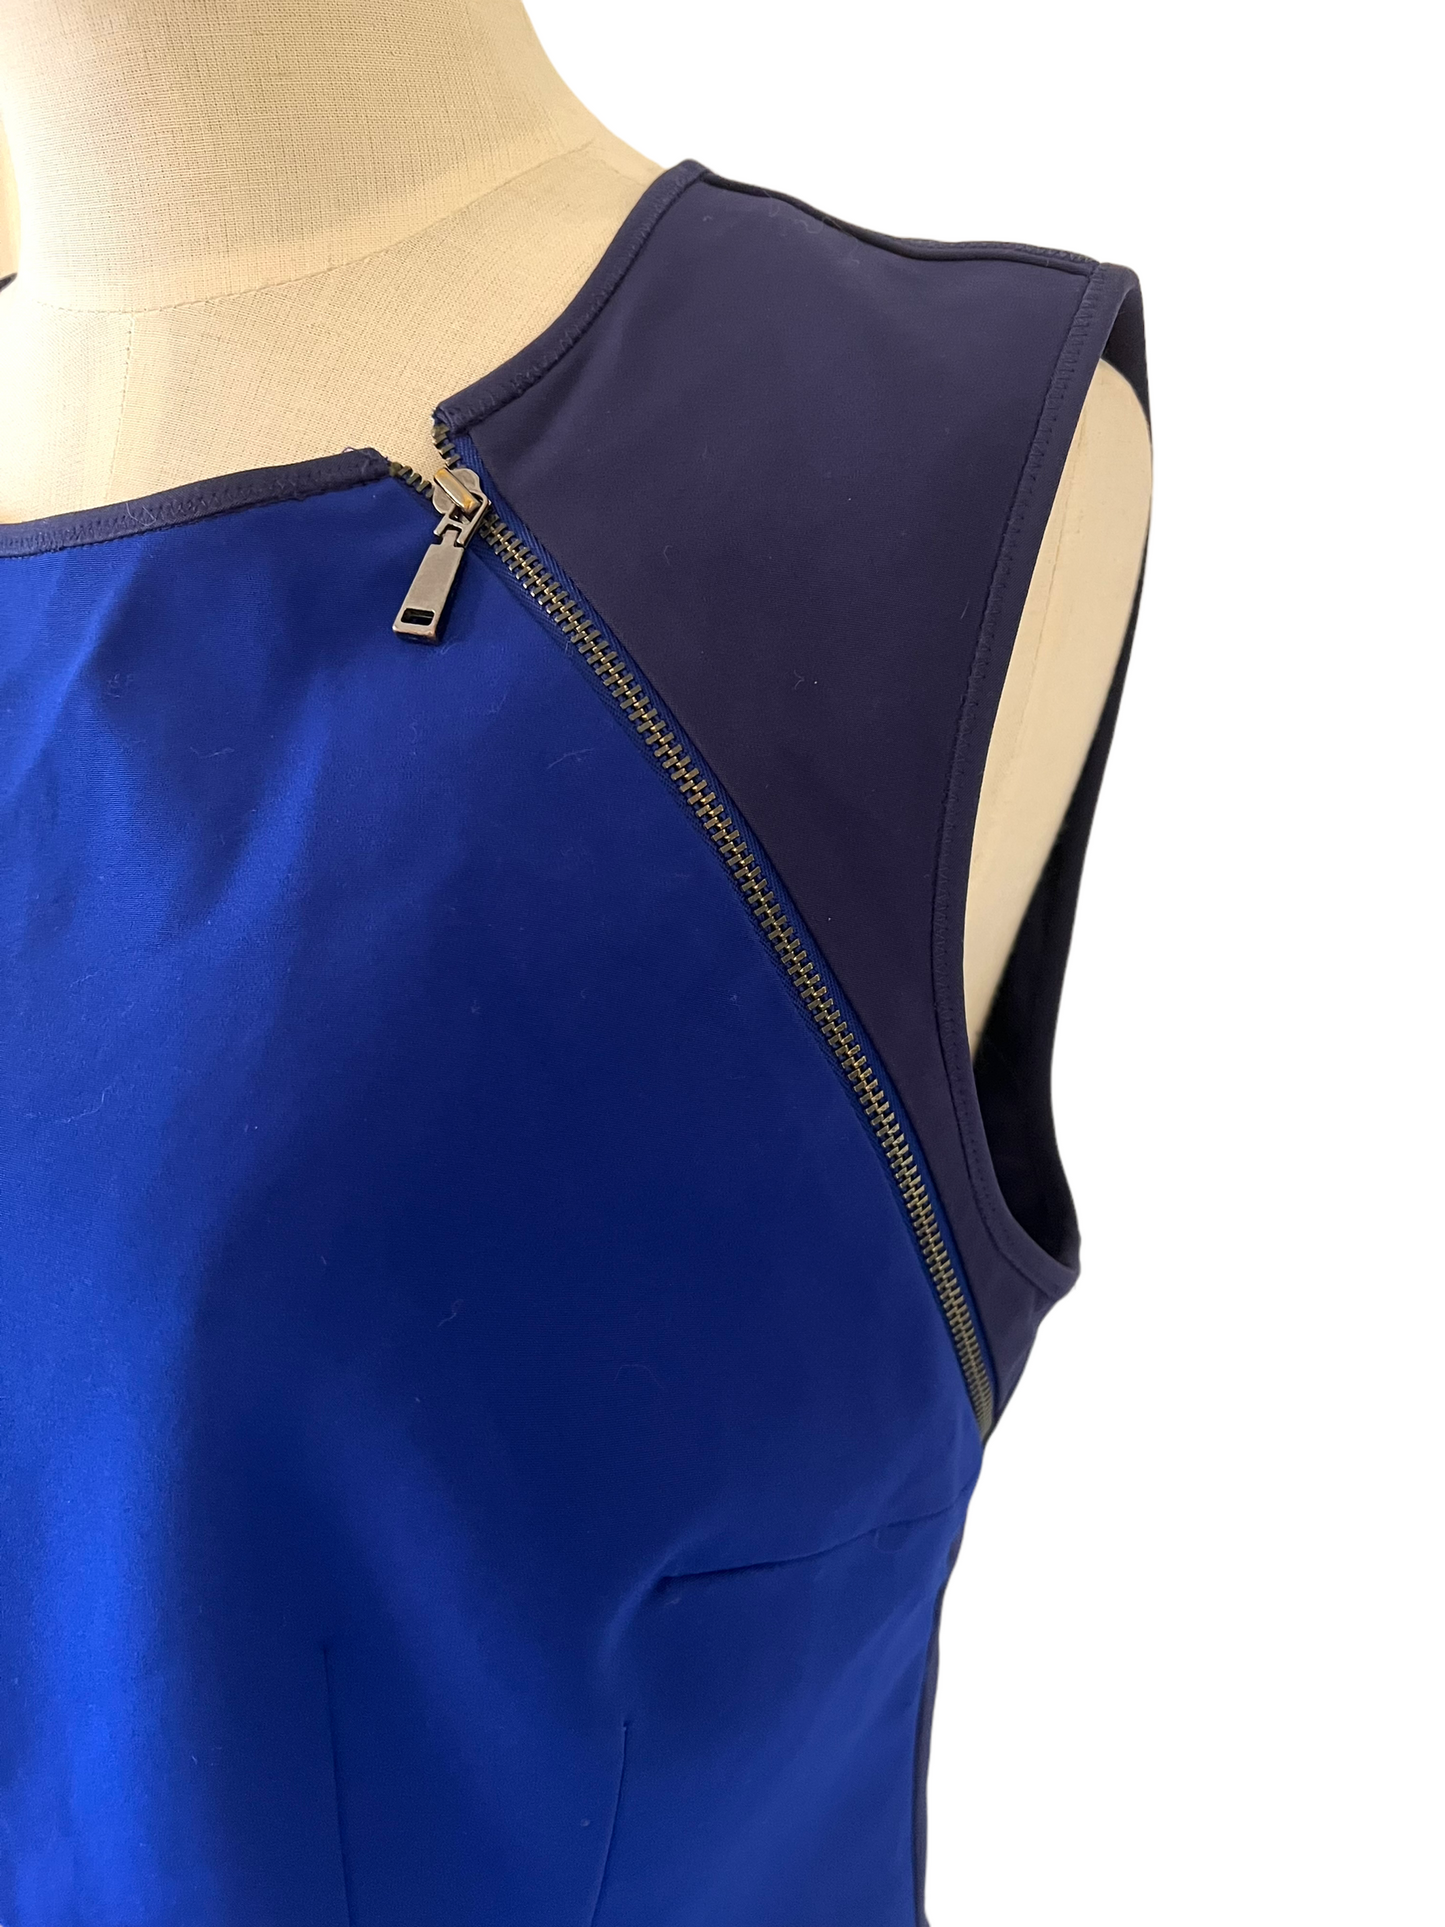 Elie Tahari Navy & Blue Color Block Size 8 Dress